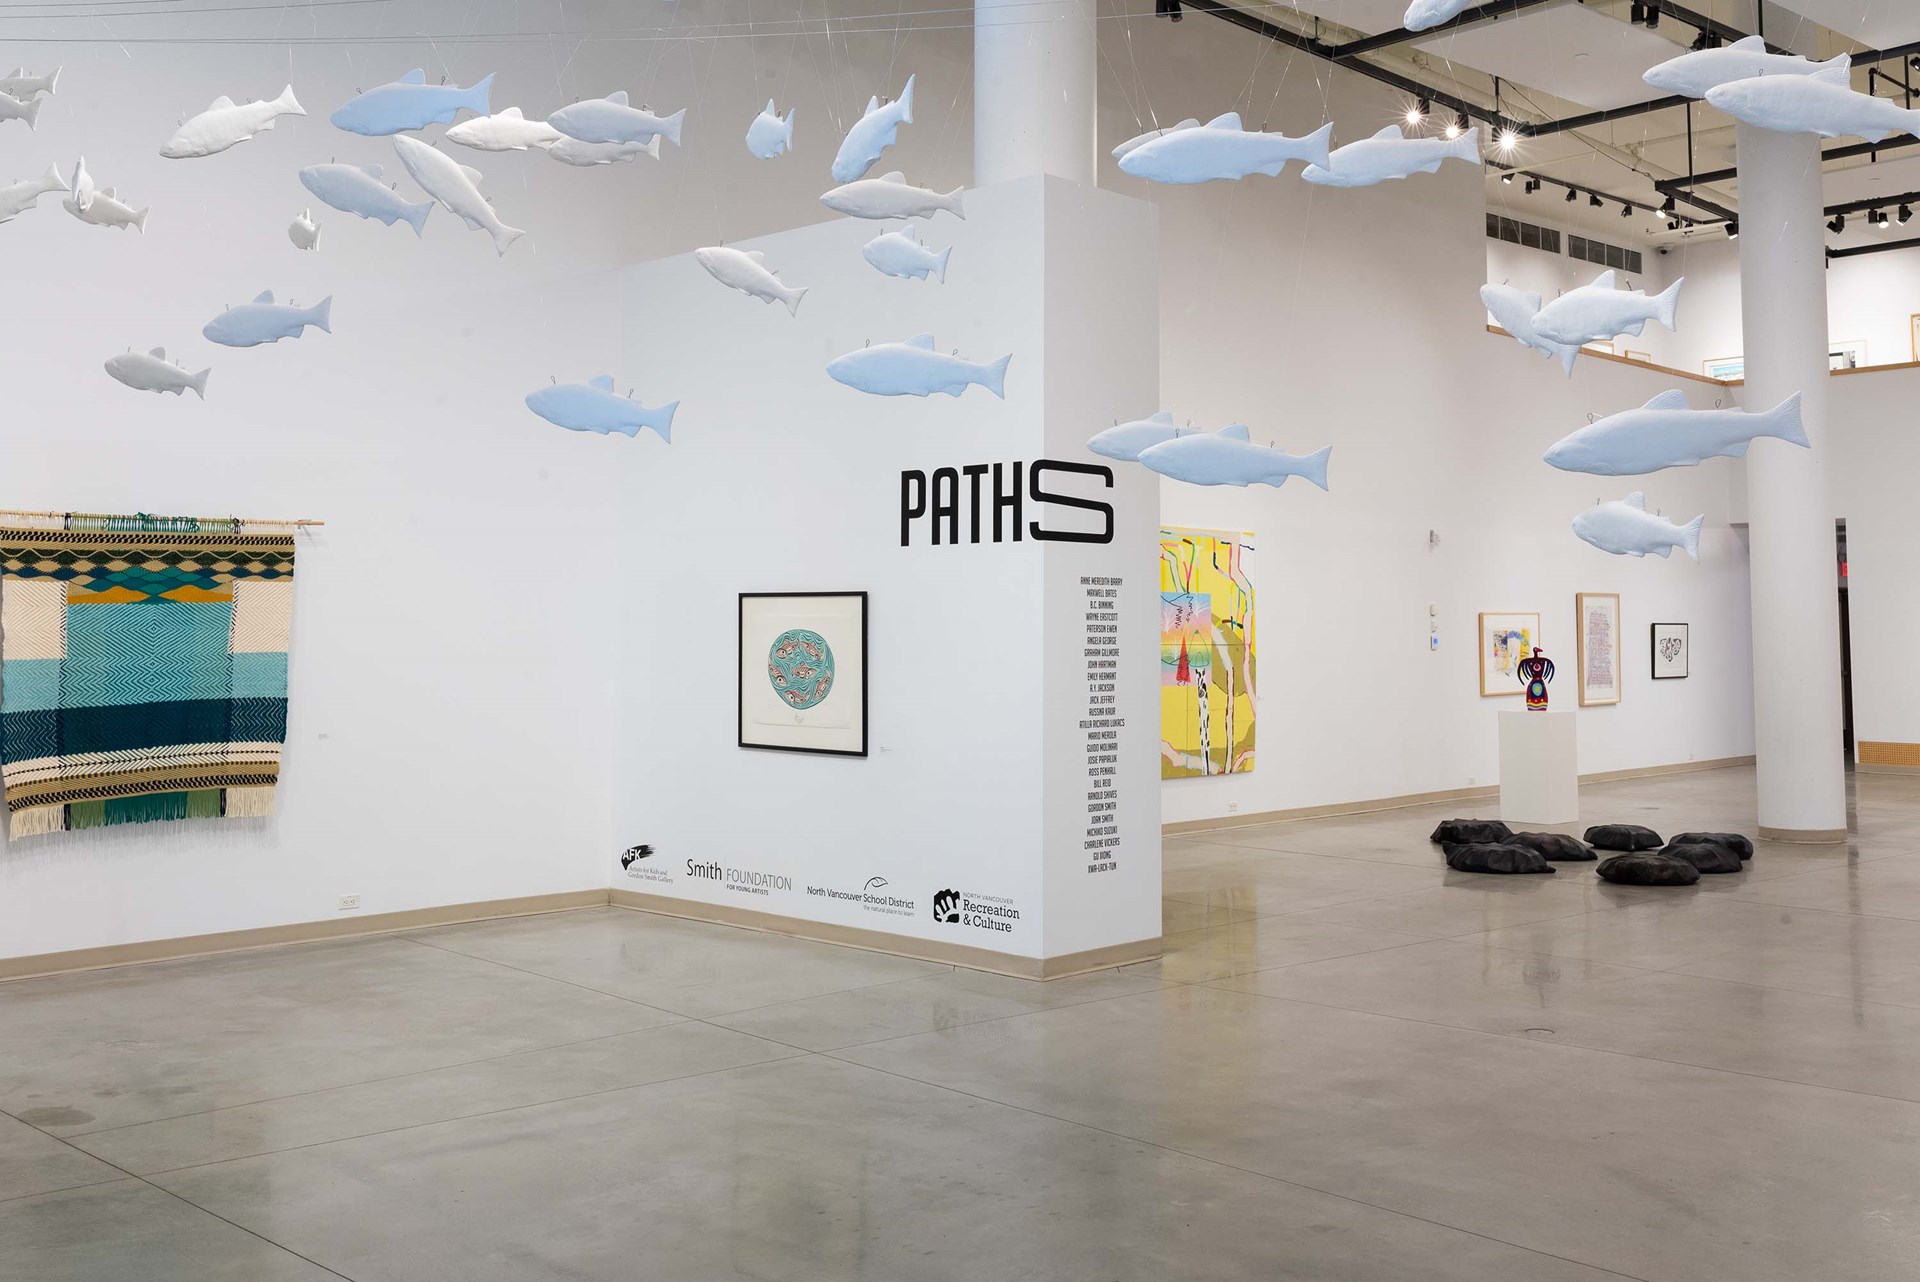 Gordon Smith Gallery Current Exhibition: PATHS